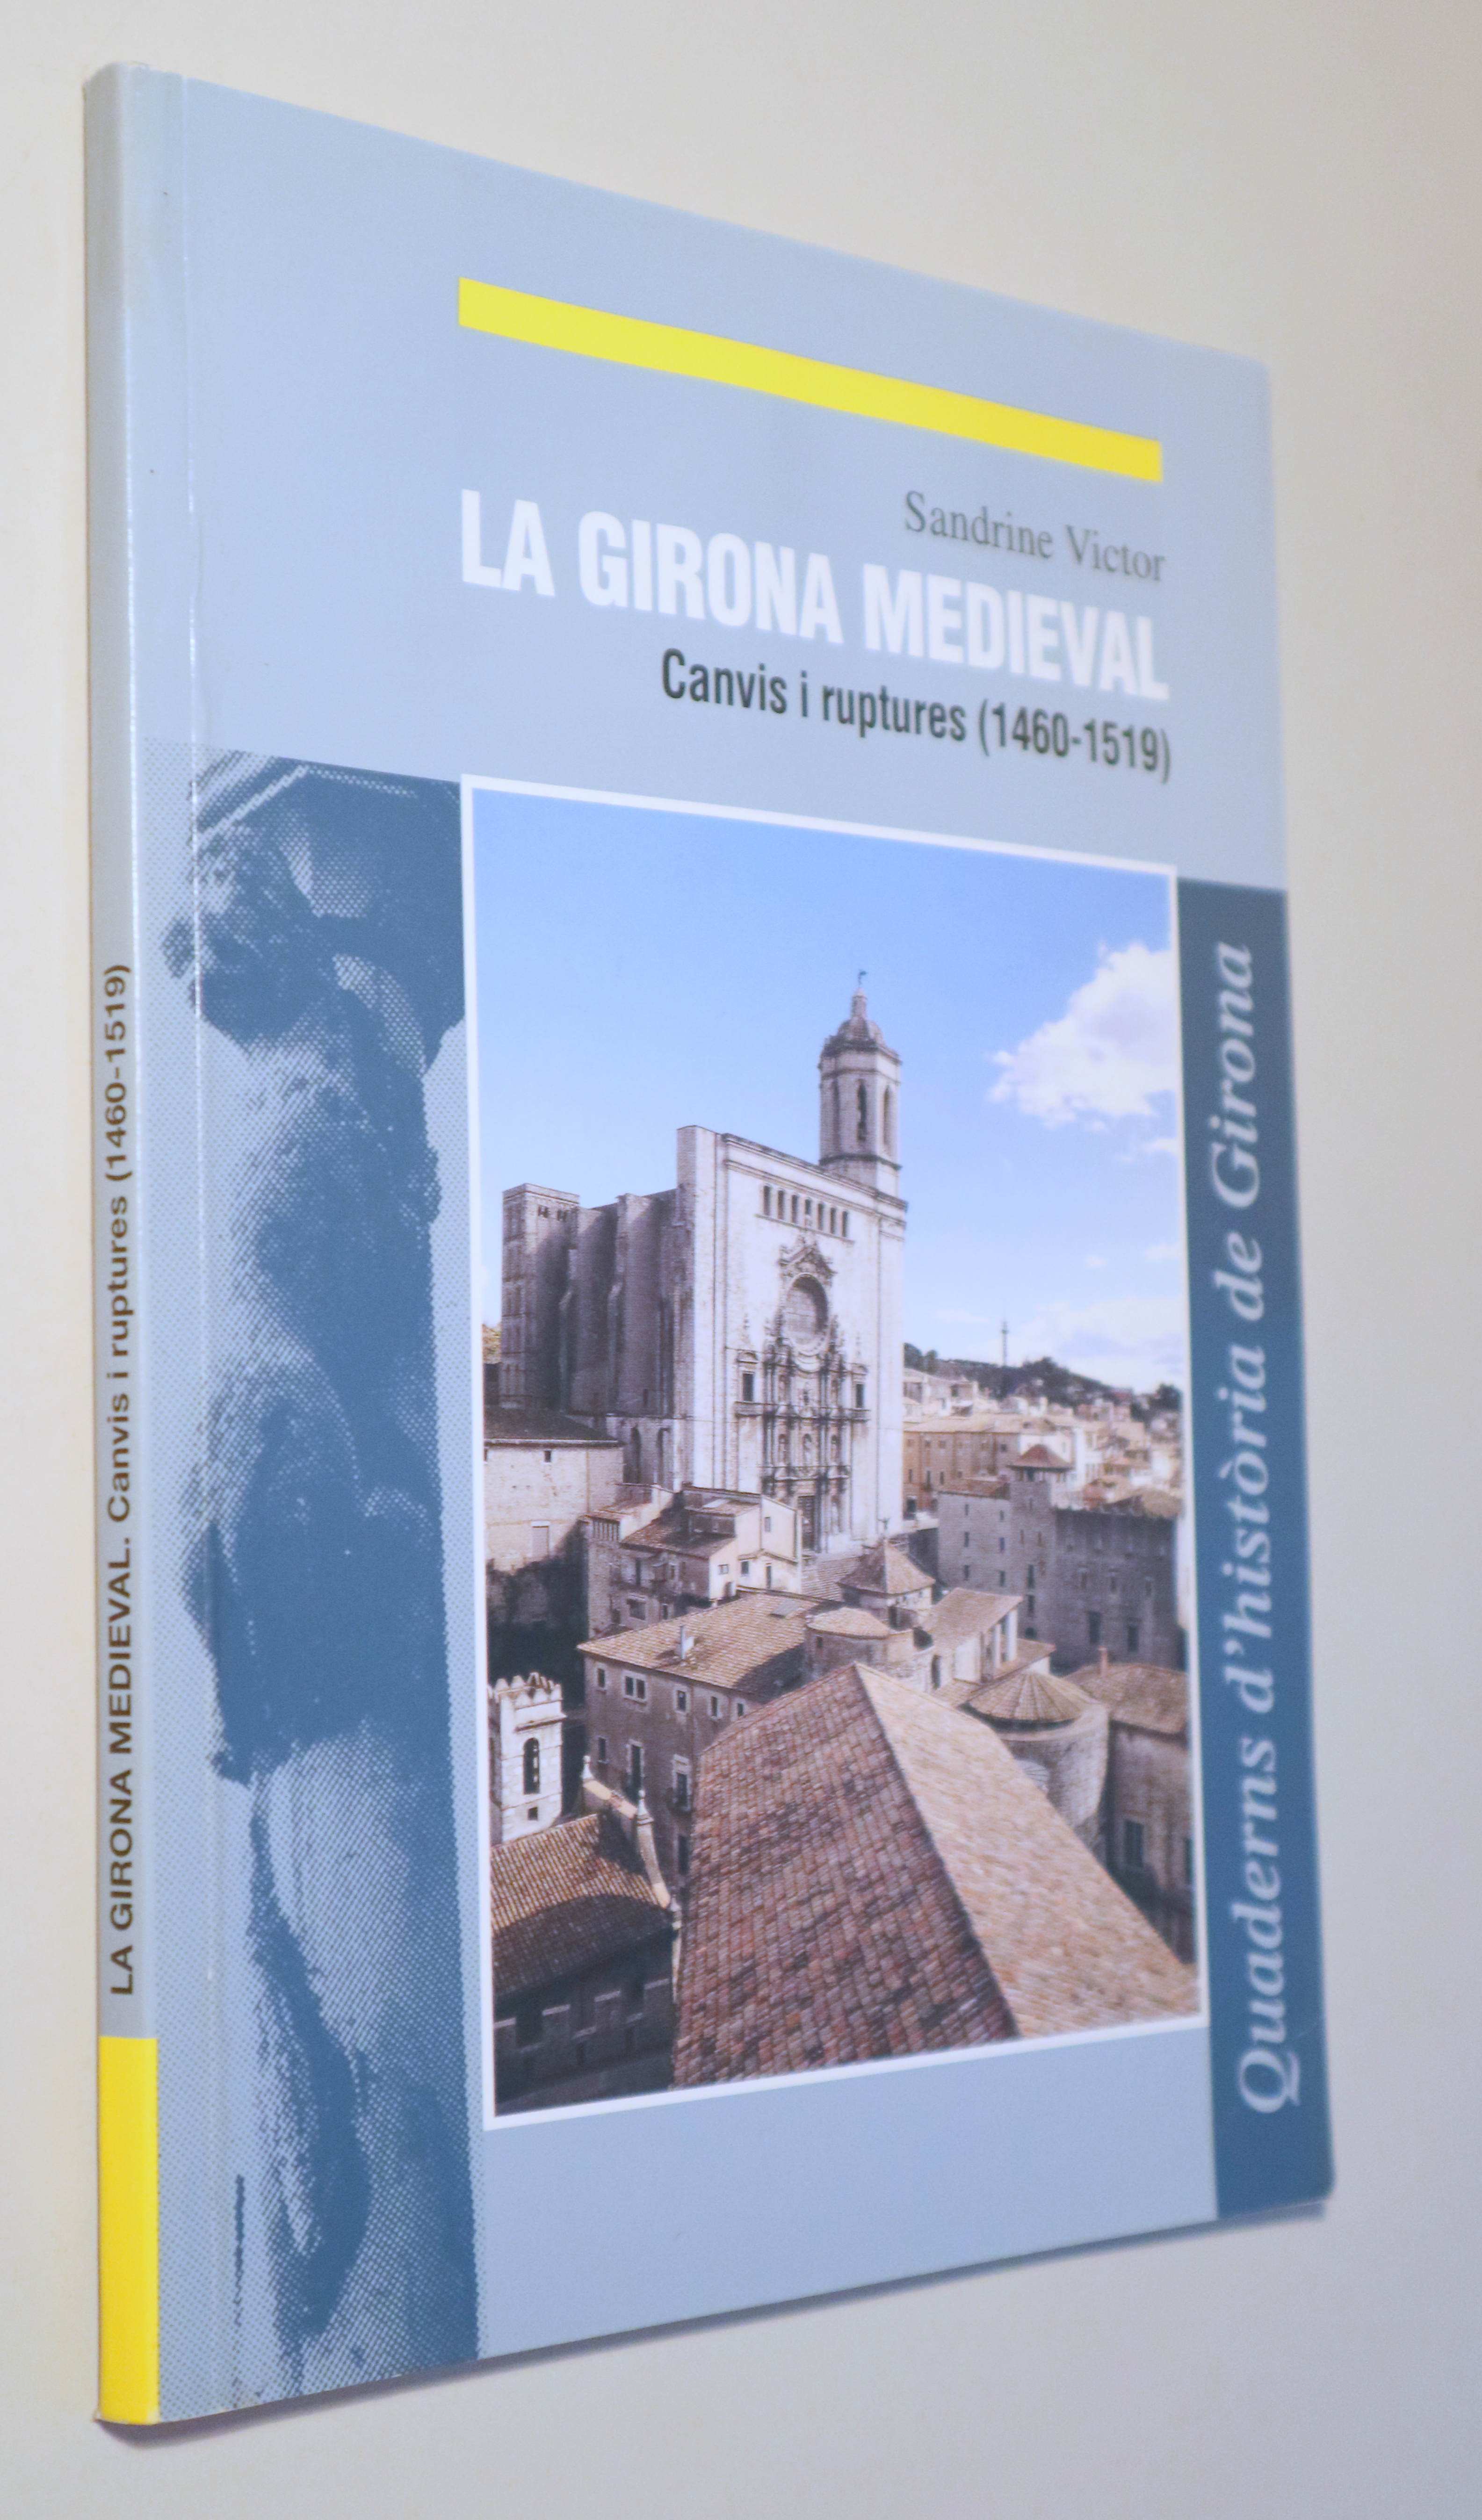 LA GIRONA MEDIEVAL. Canvis i ruptures 1460-1519 - Girona 2001 - Molt il·lustrat